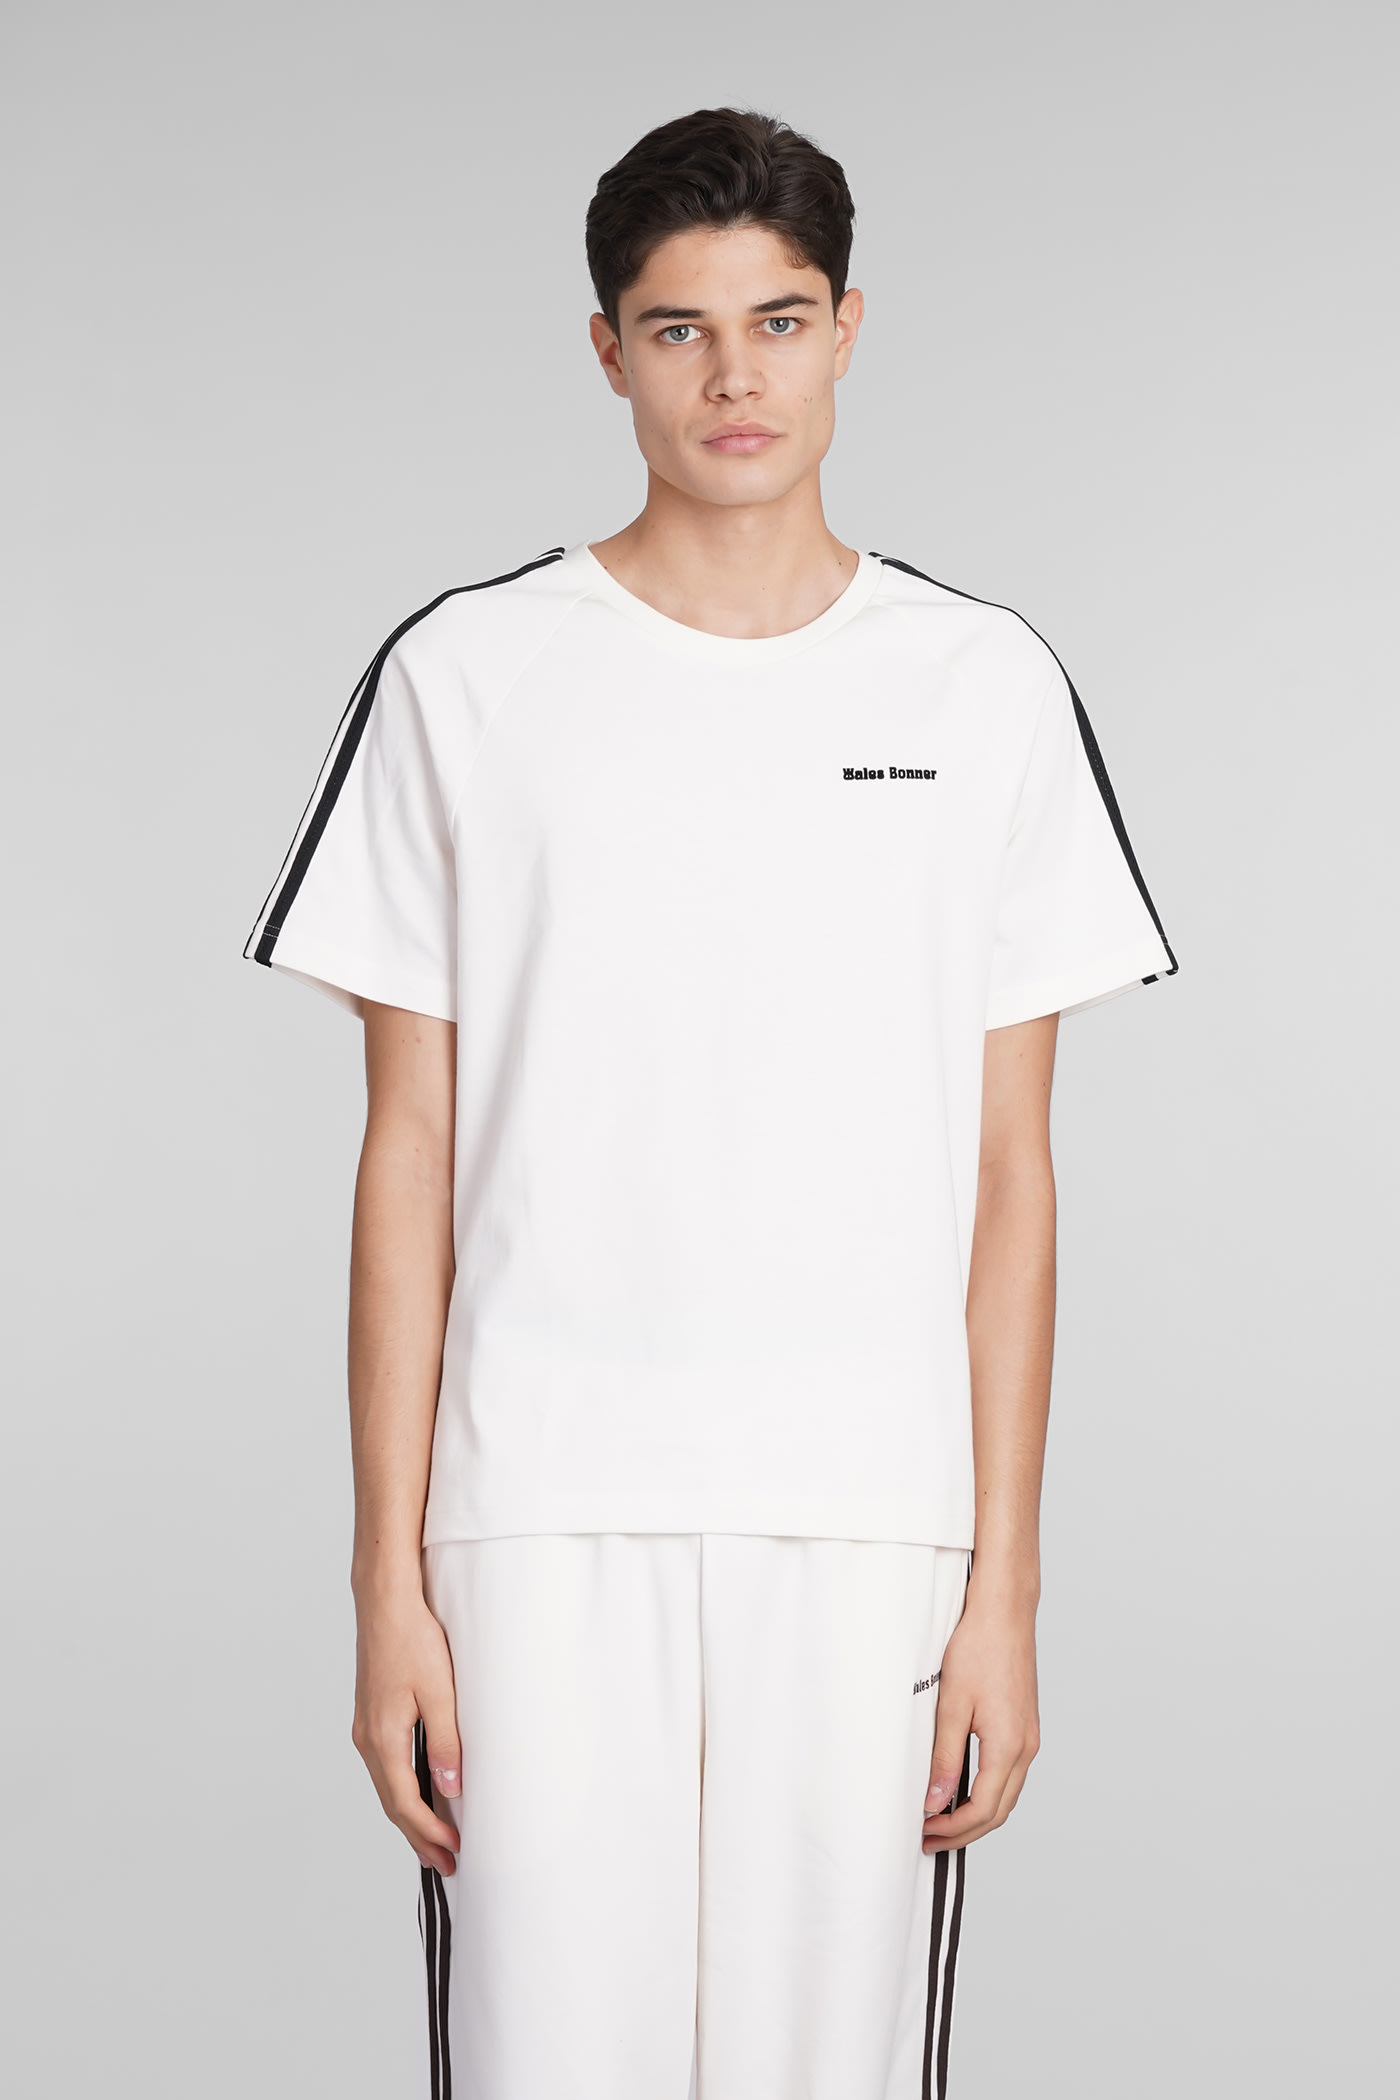 Shop Adidas Originals By Wales Bonner T-shirt In White Cotton